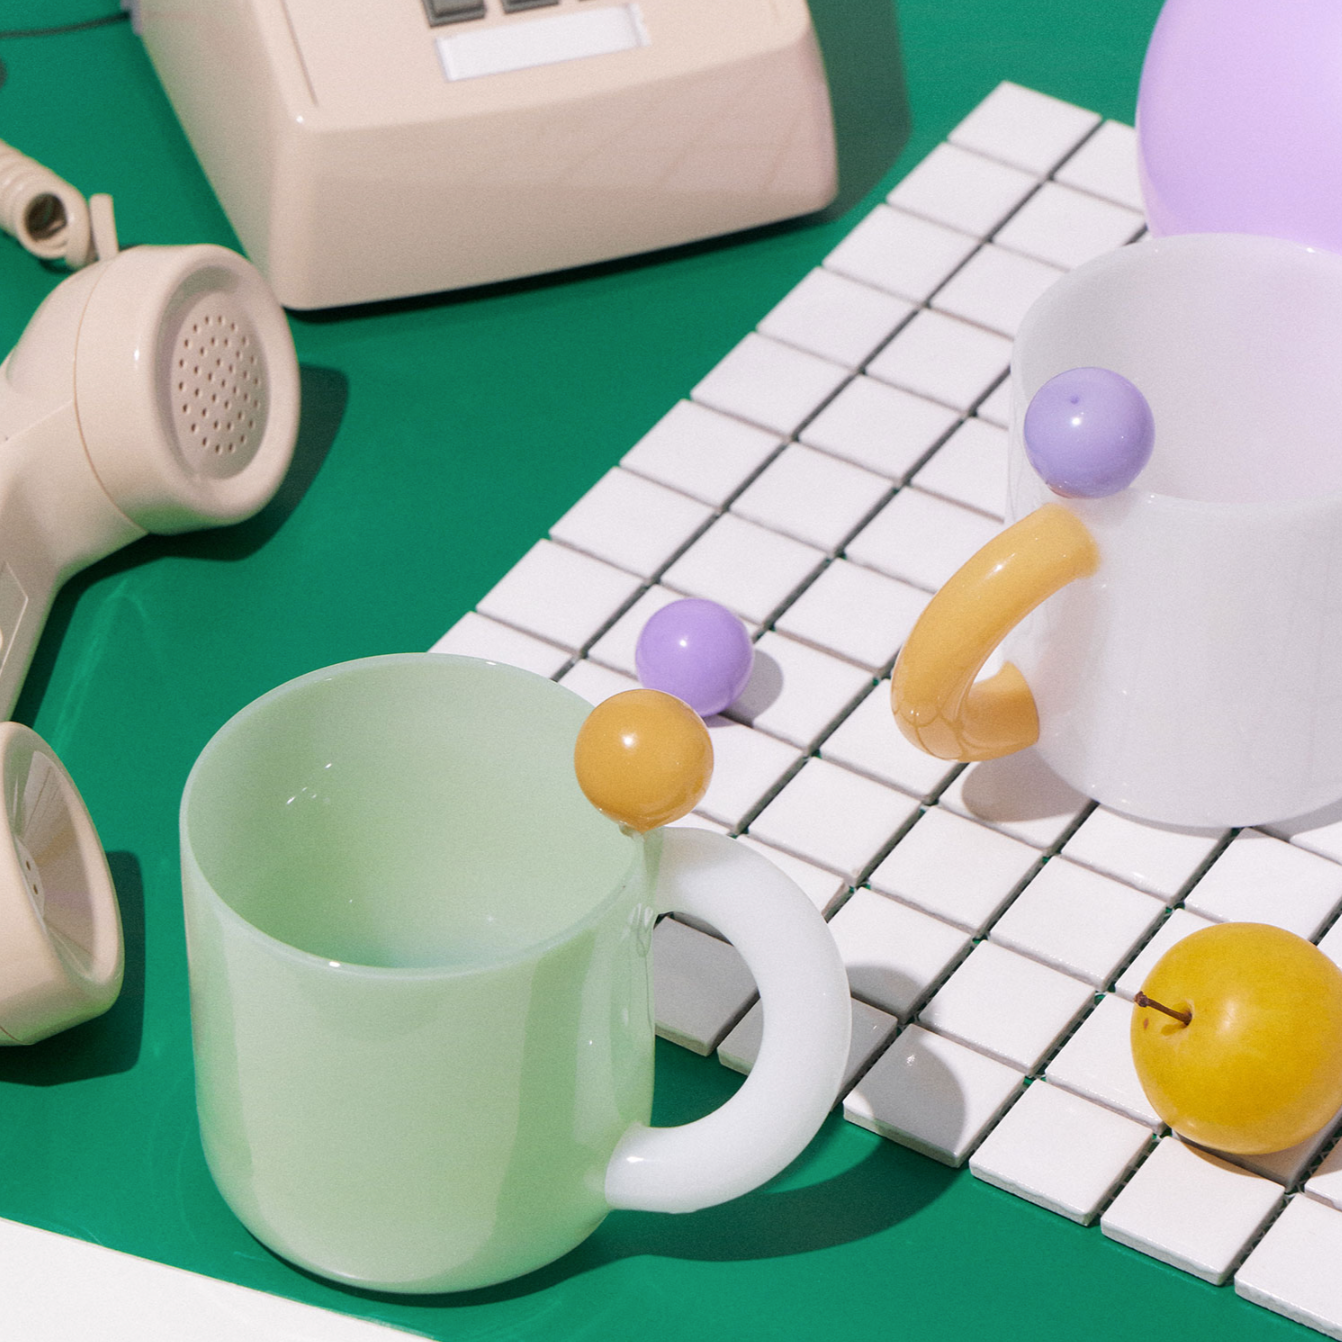 SRM - Solid Color Candy Mug-Drinkware- A Bit Sleepy | Homedecor Concept Store